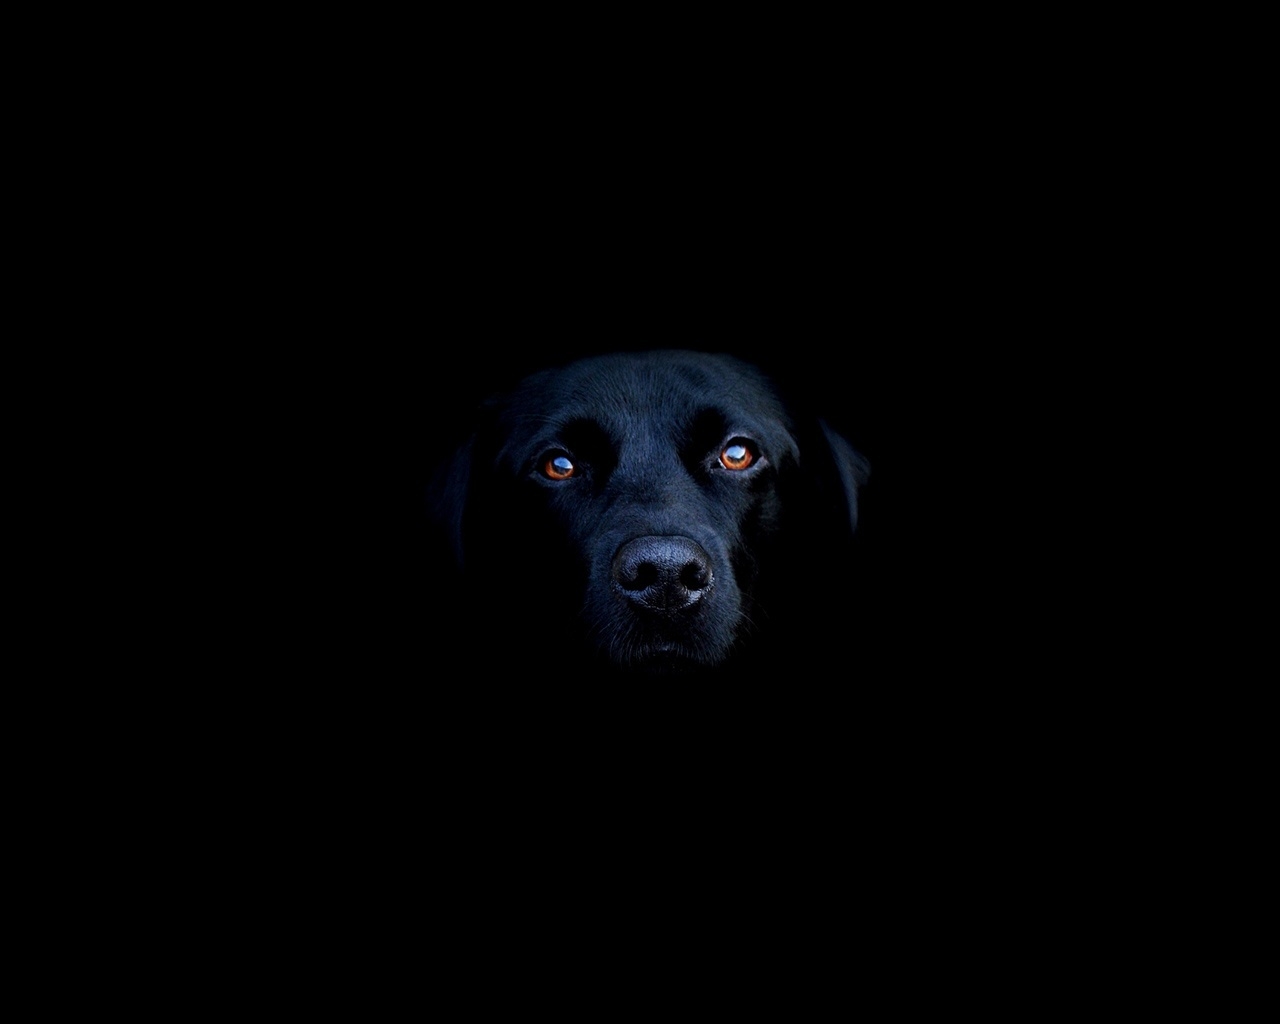 Black dog for 1280 x 1024 resolution